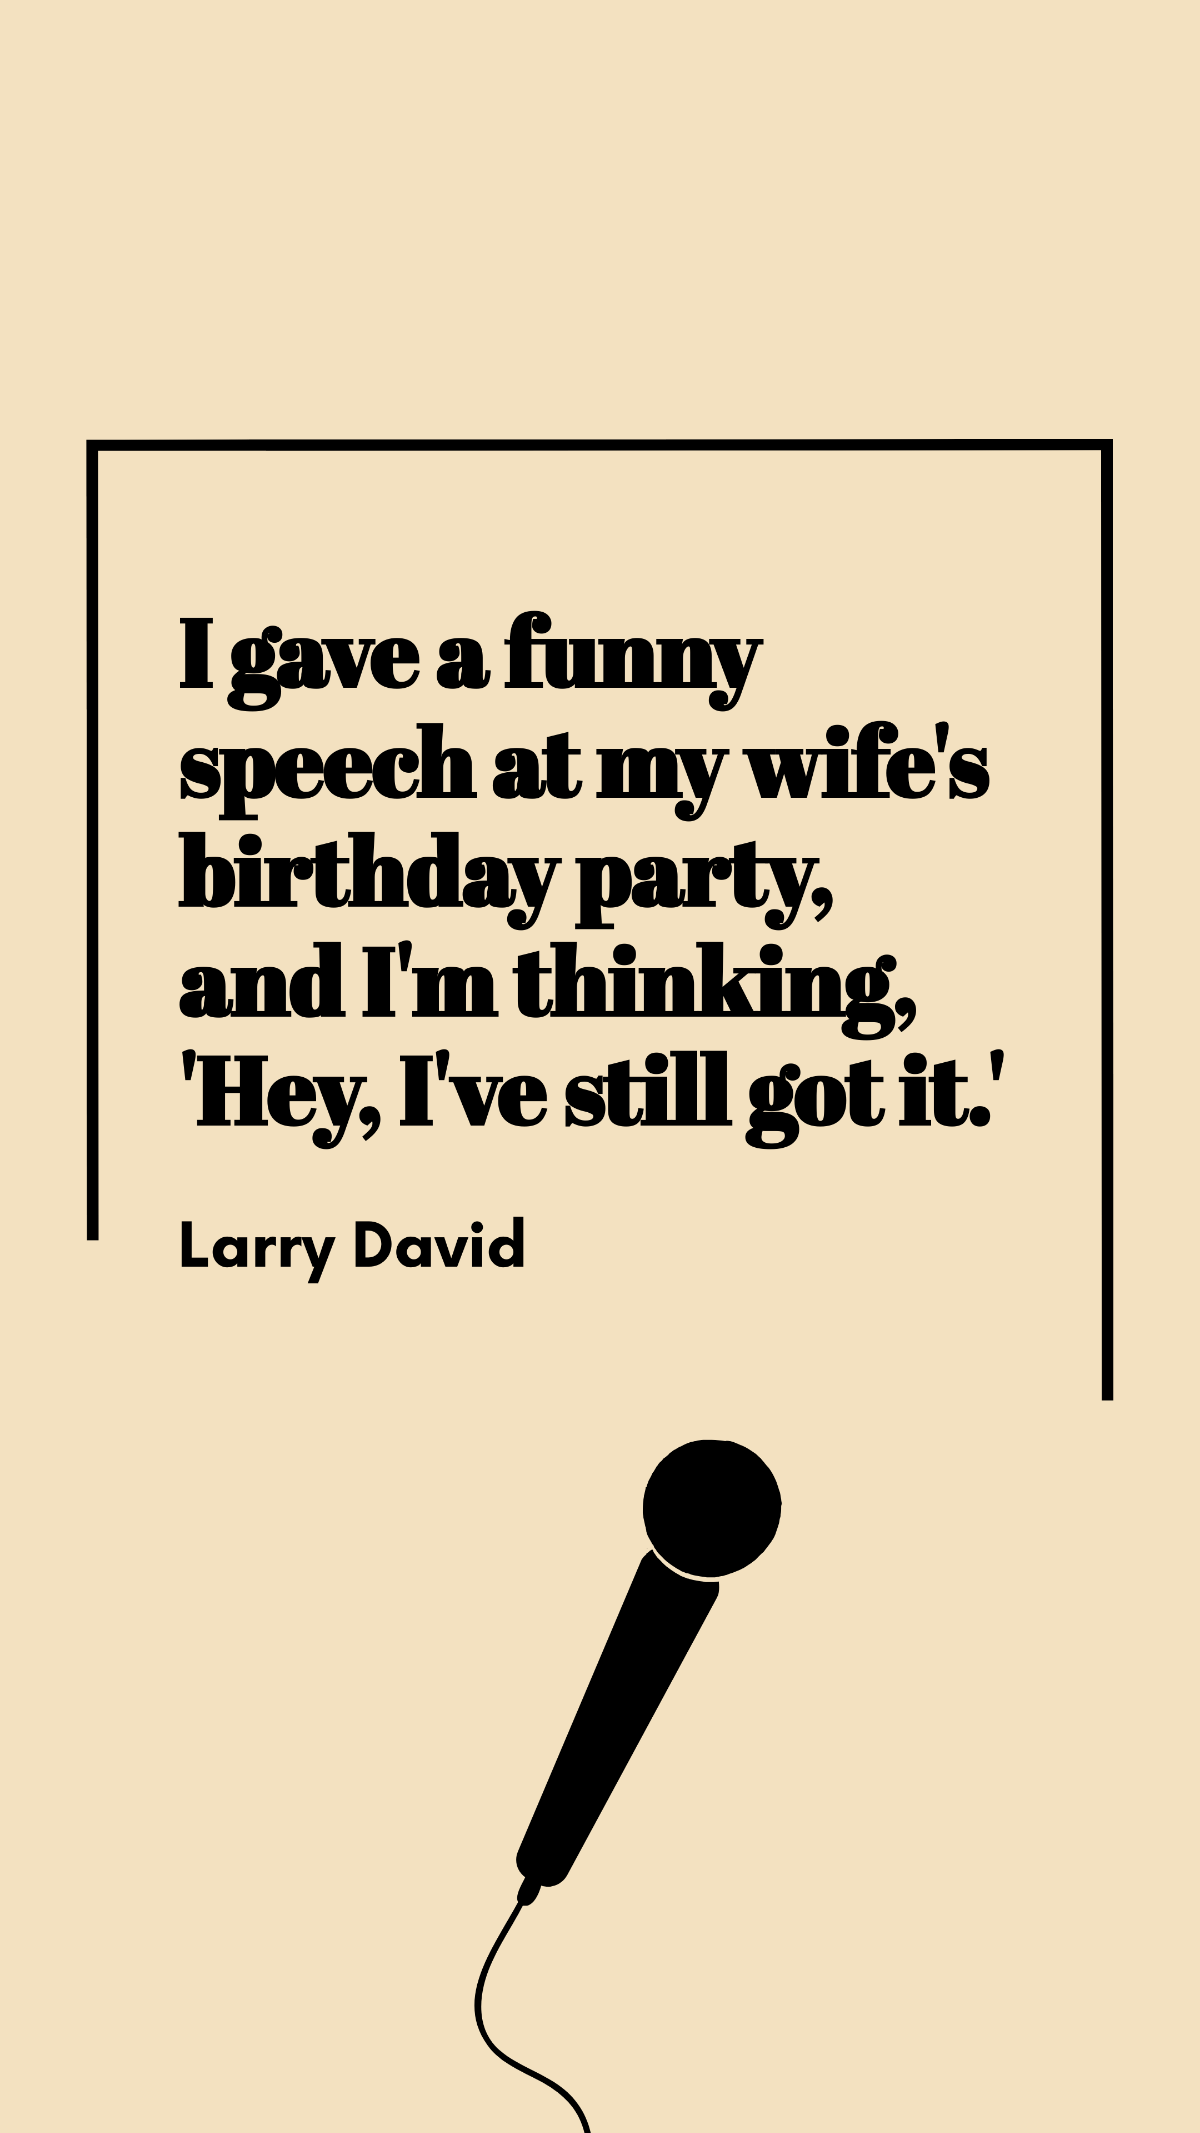 Larry David - I gave a funny speech at my wife's birthday party, and I'm thinking, 'Hey, I've still got it.'